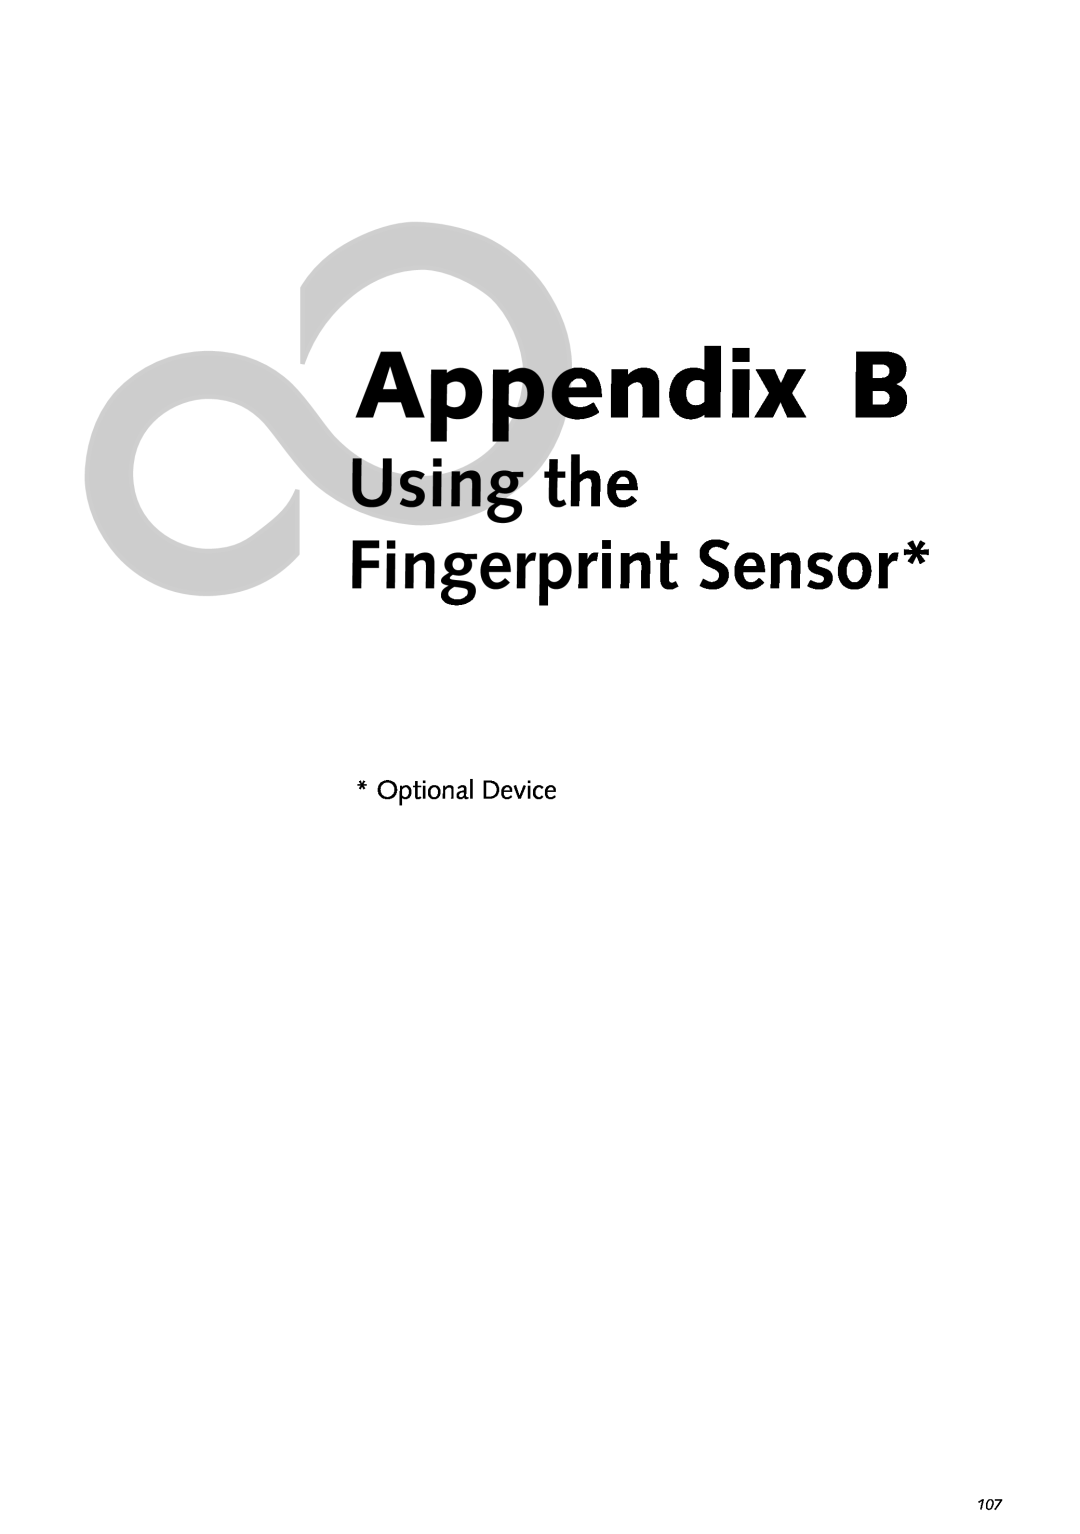 Fujitsu Siemens Computers S2210 manual Using the Fingerprint Sensor, Appendix B, Optional Device 